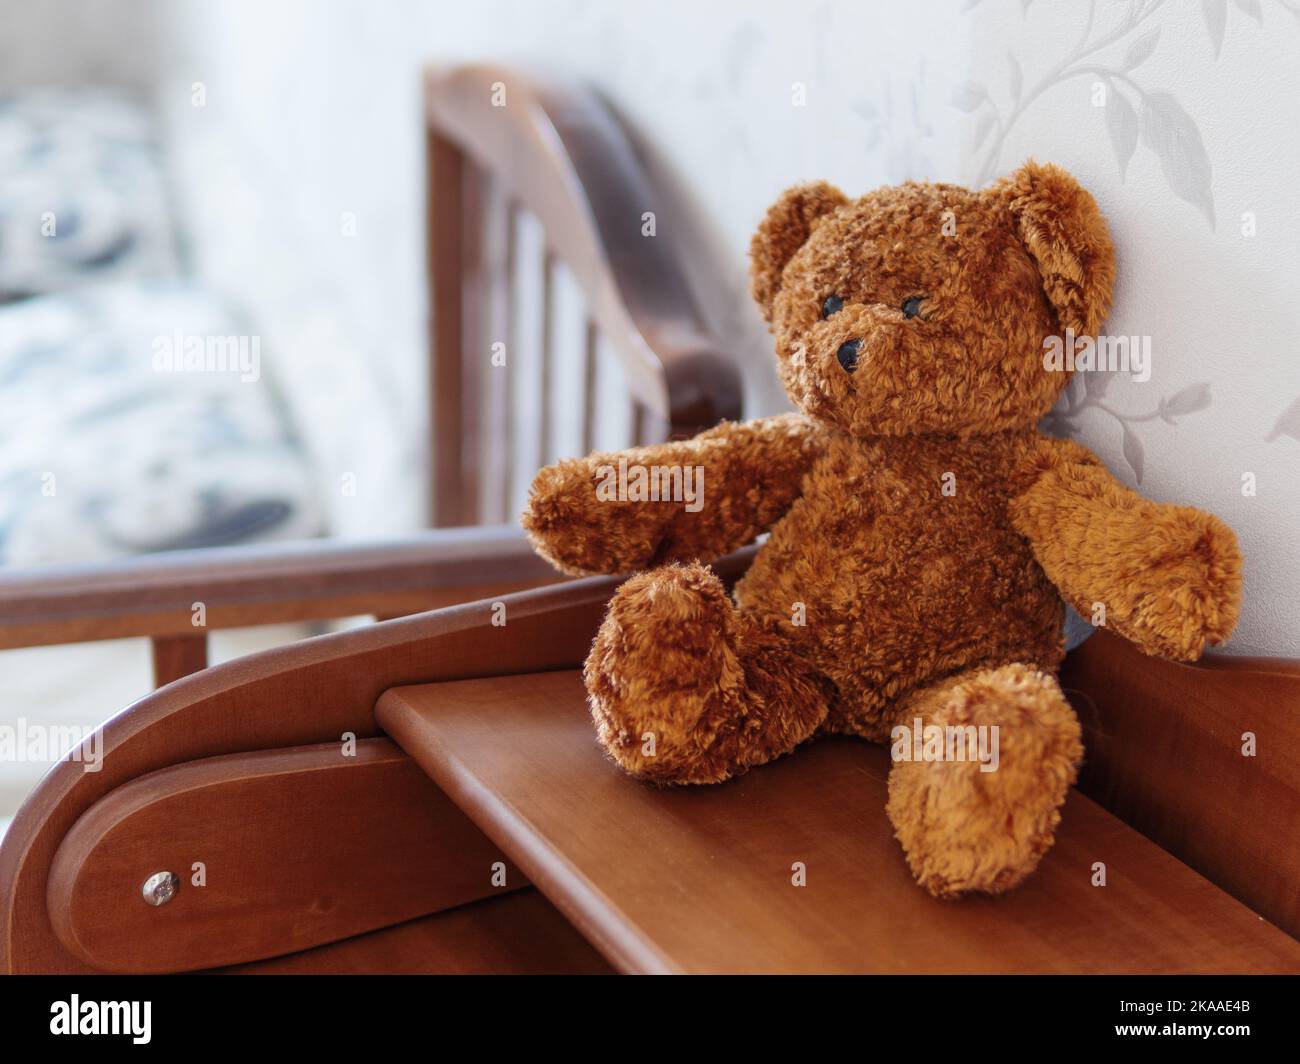 Teddy bear on wooden dresser. Plush toy in kids room. Stock Photo